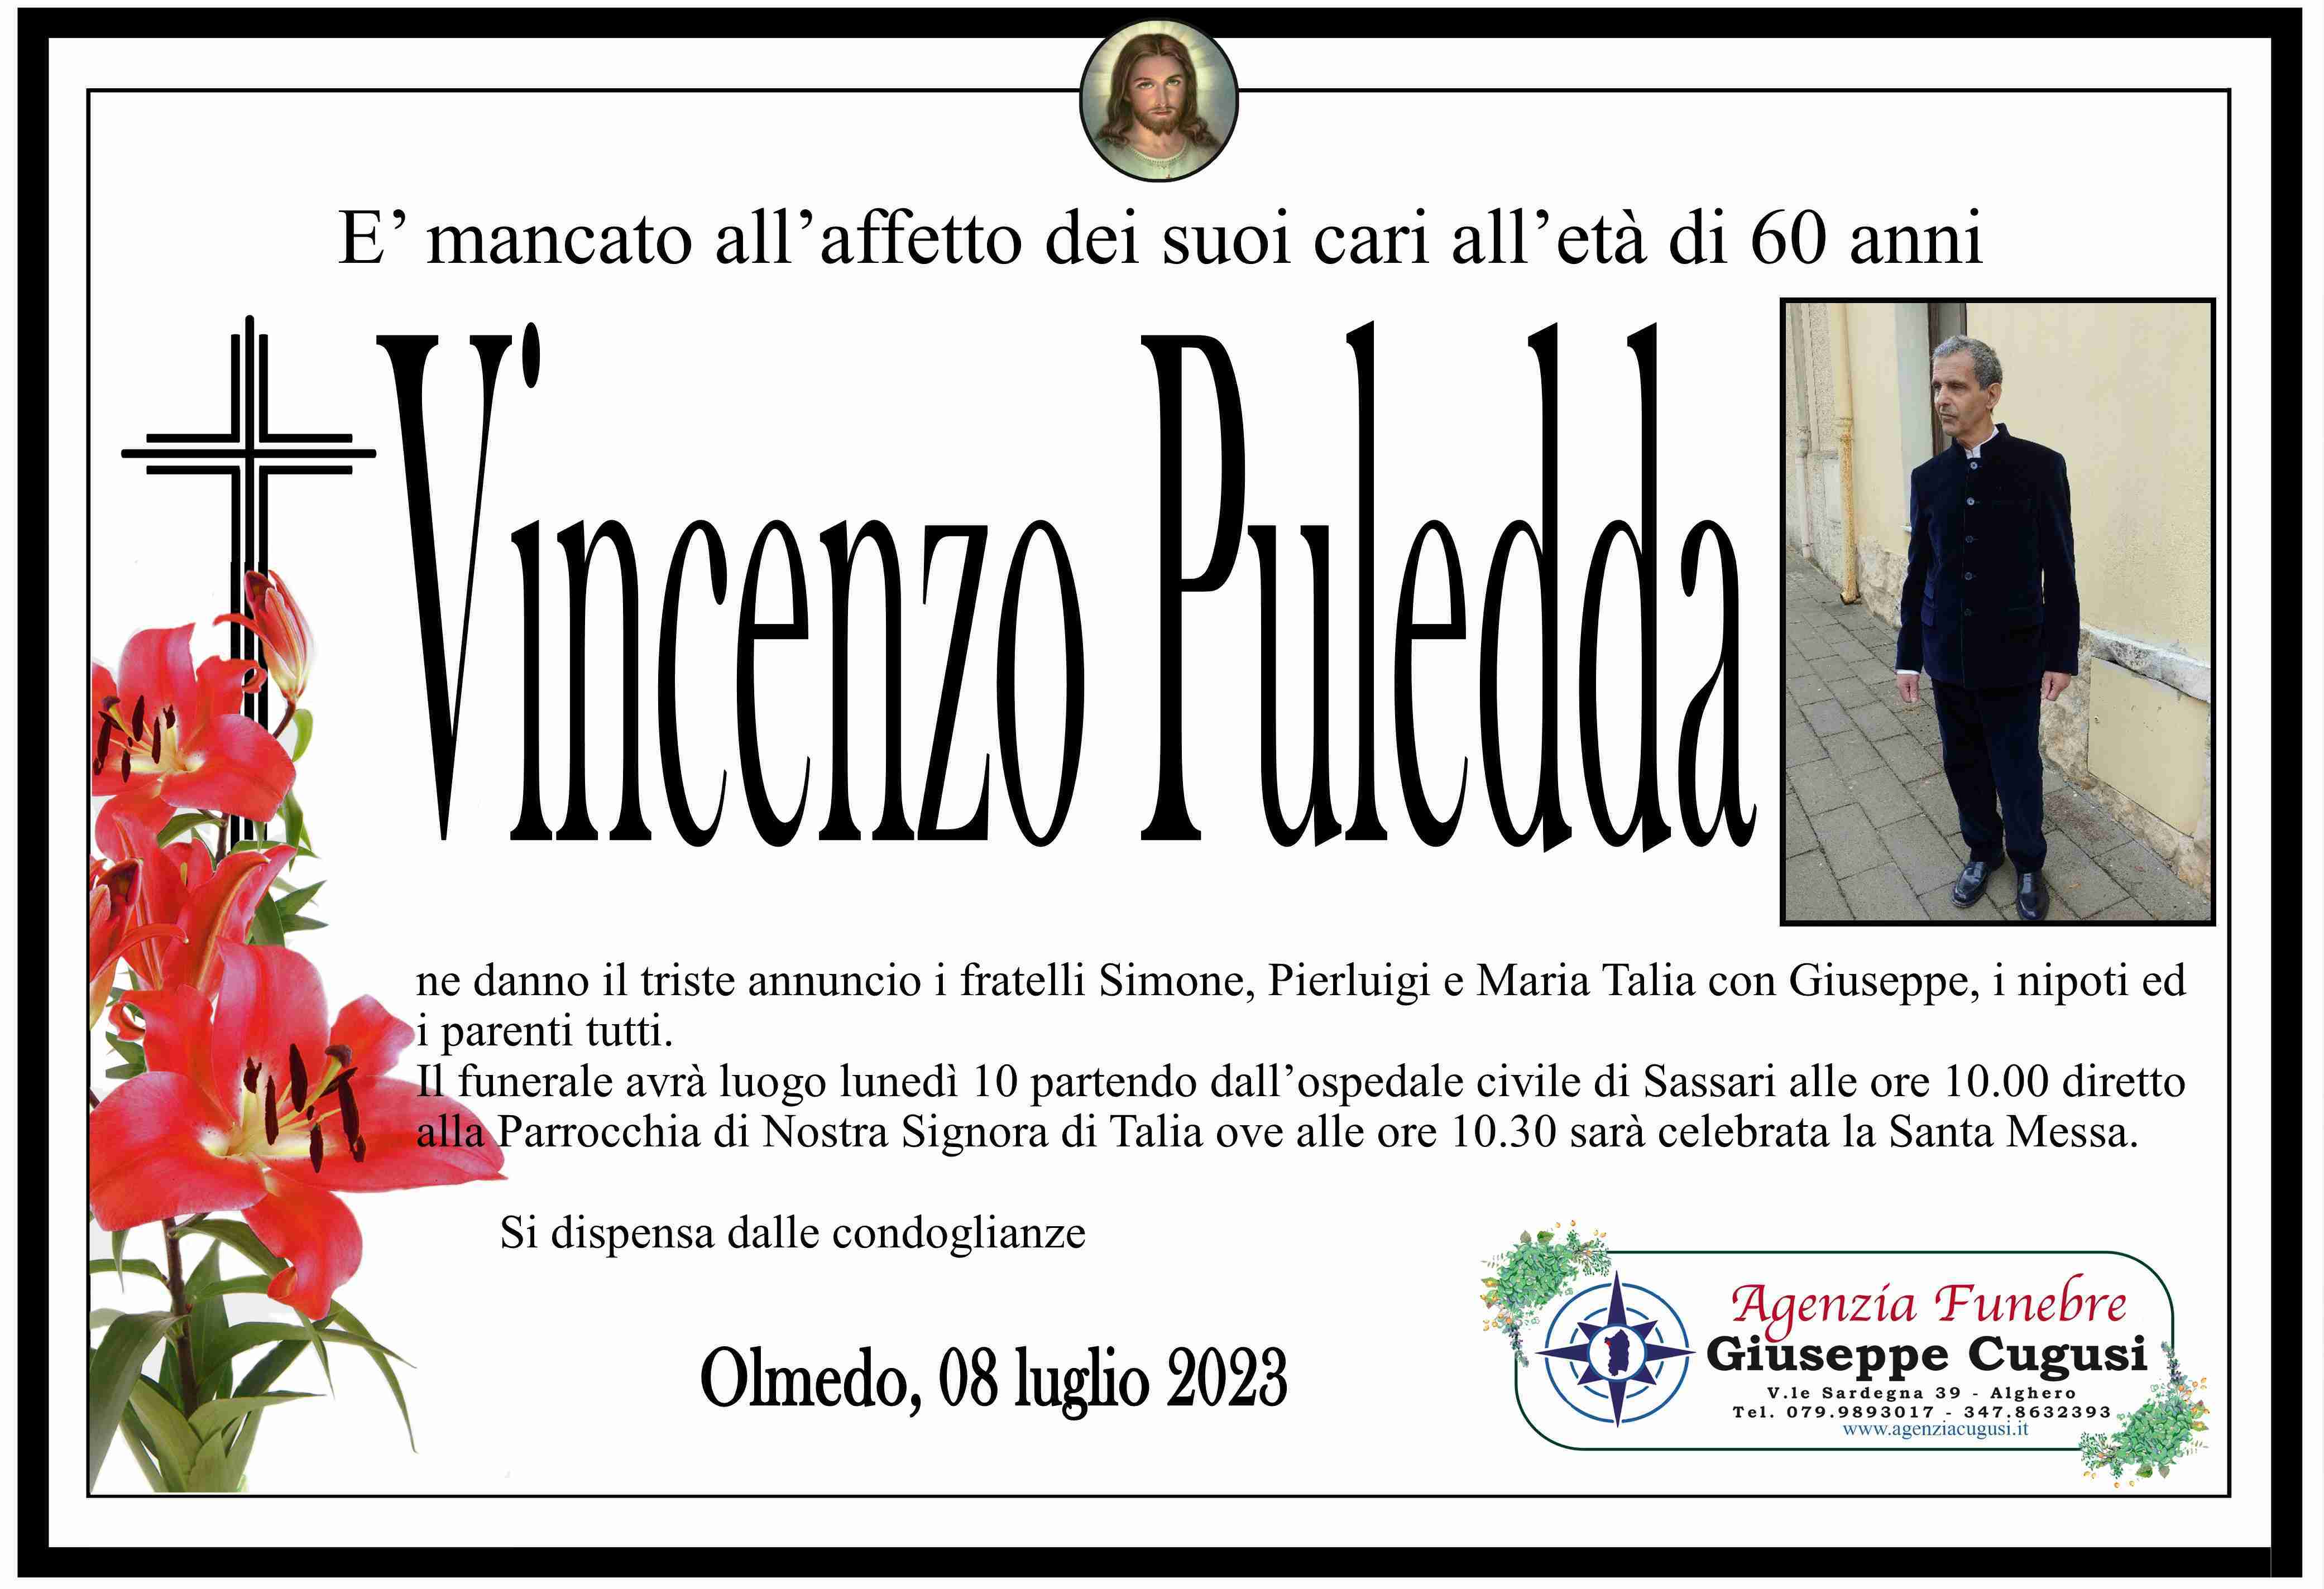 Vincenzo Puledda